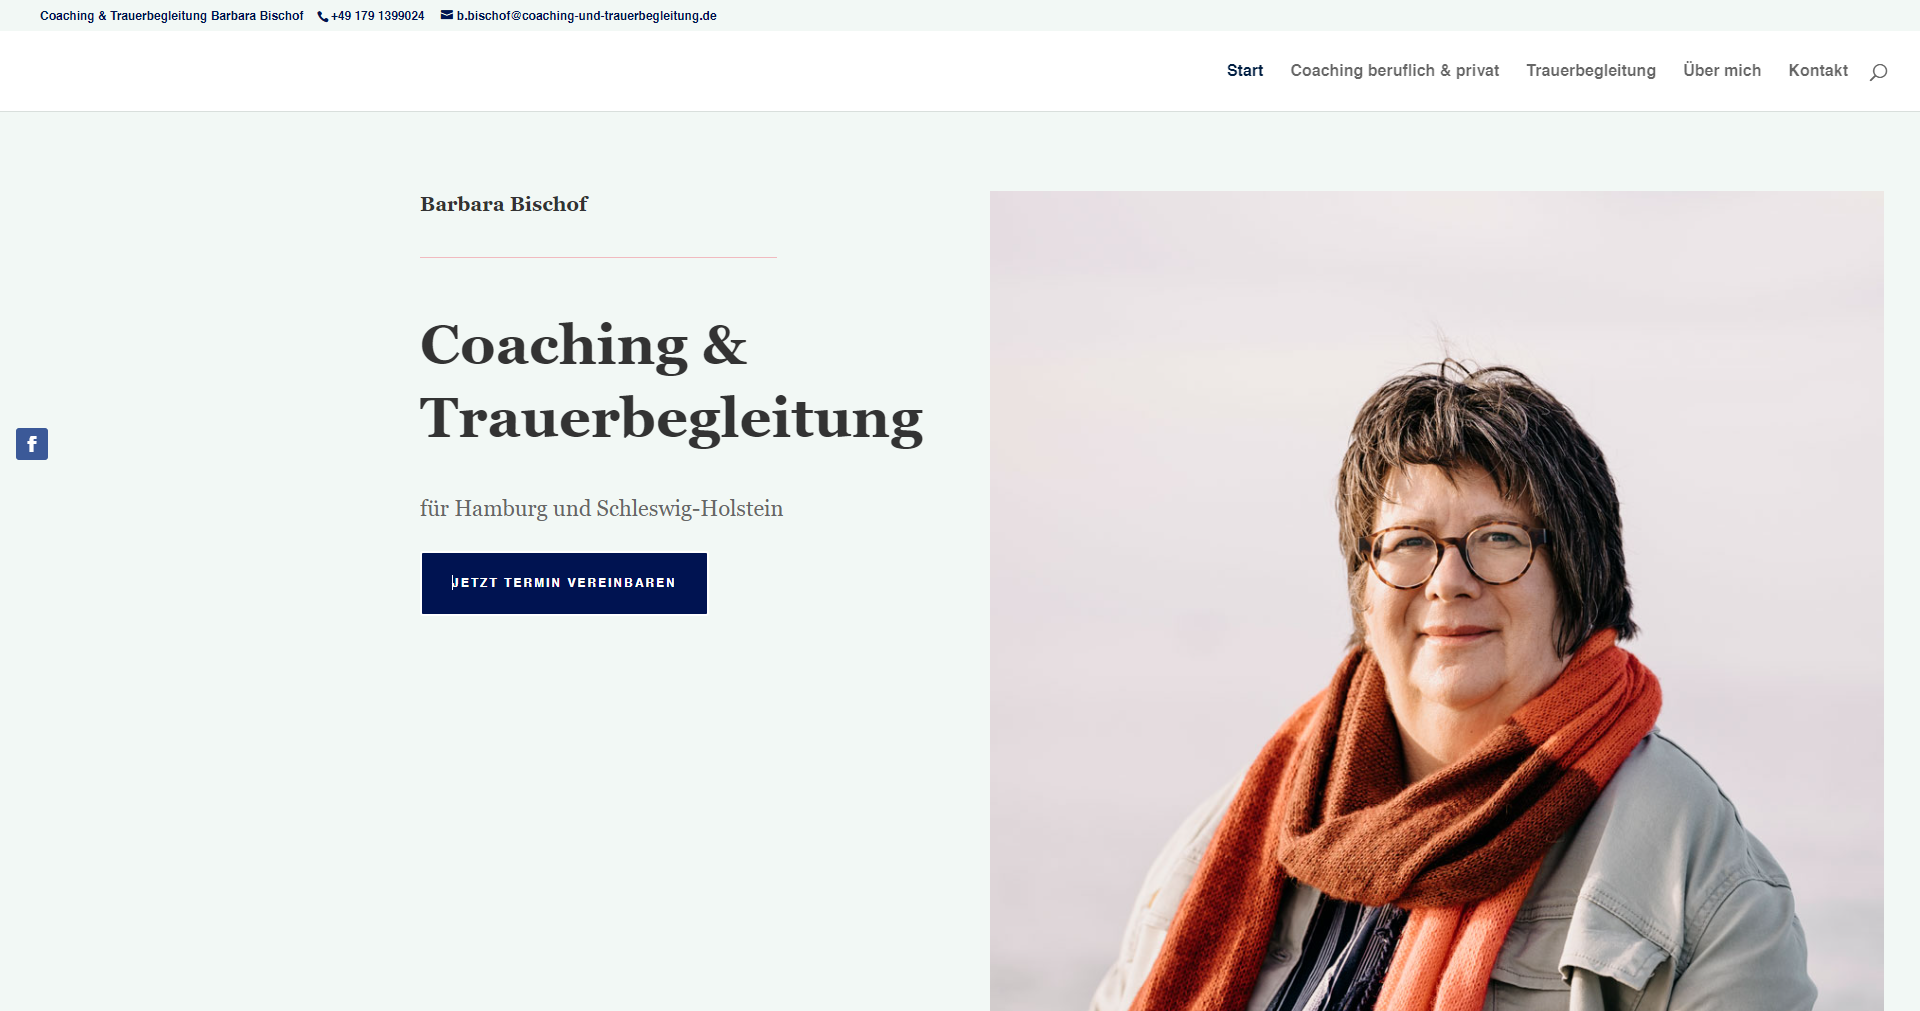 (c) Coaching-und-trauerbegleitung.de